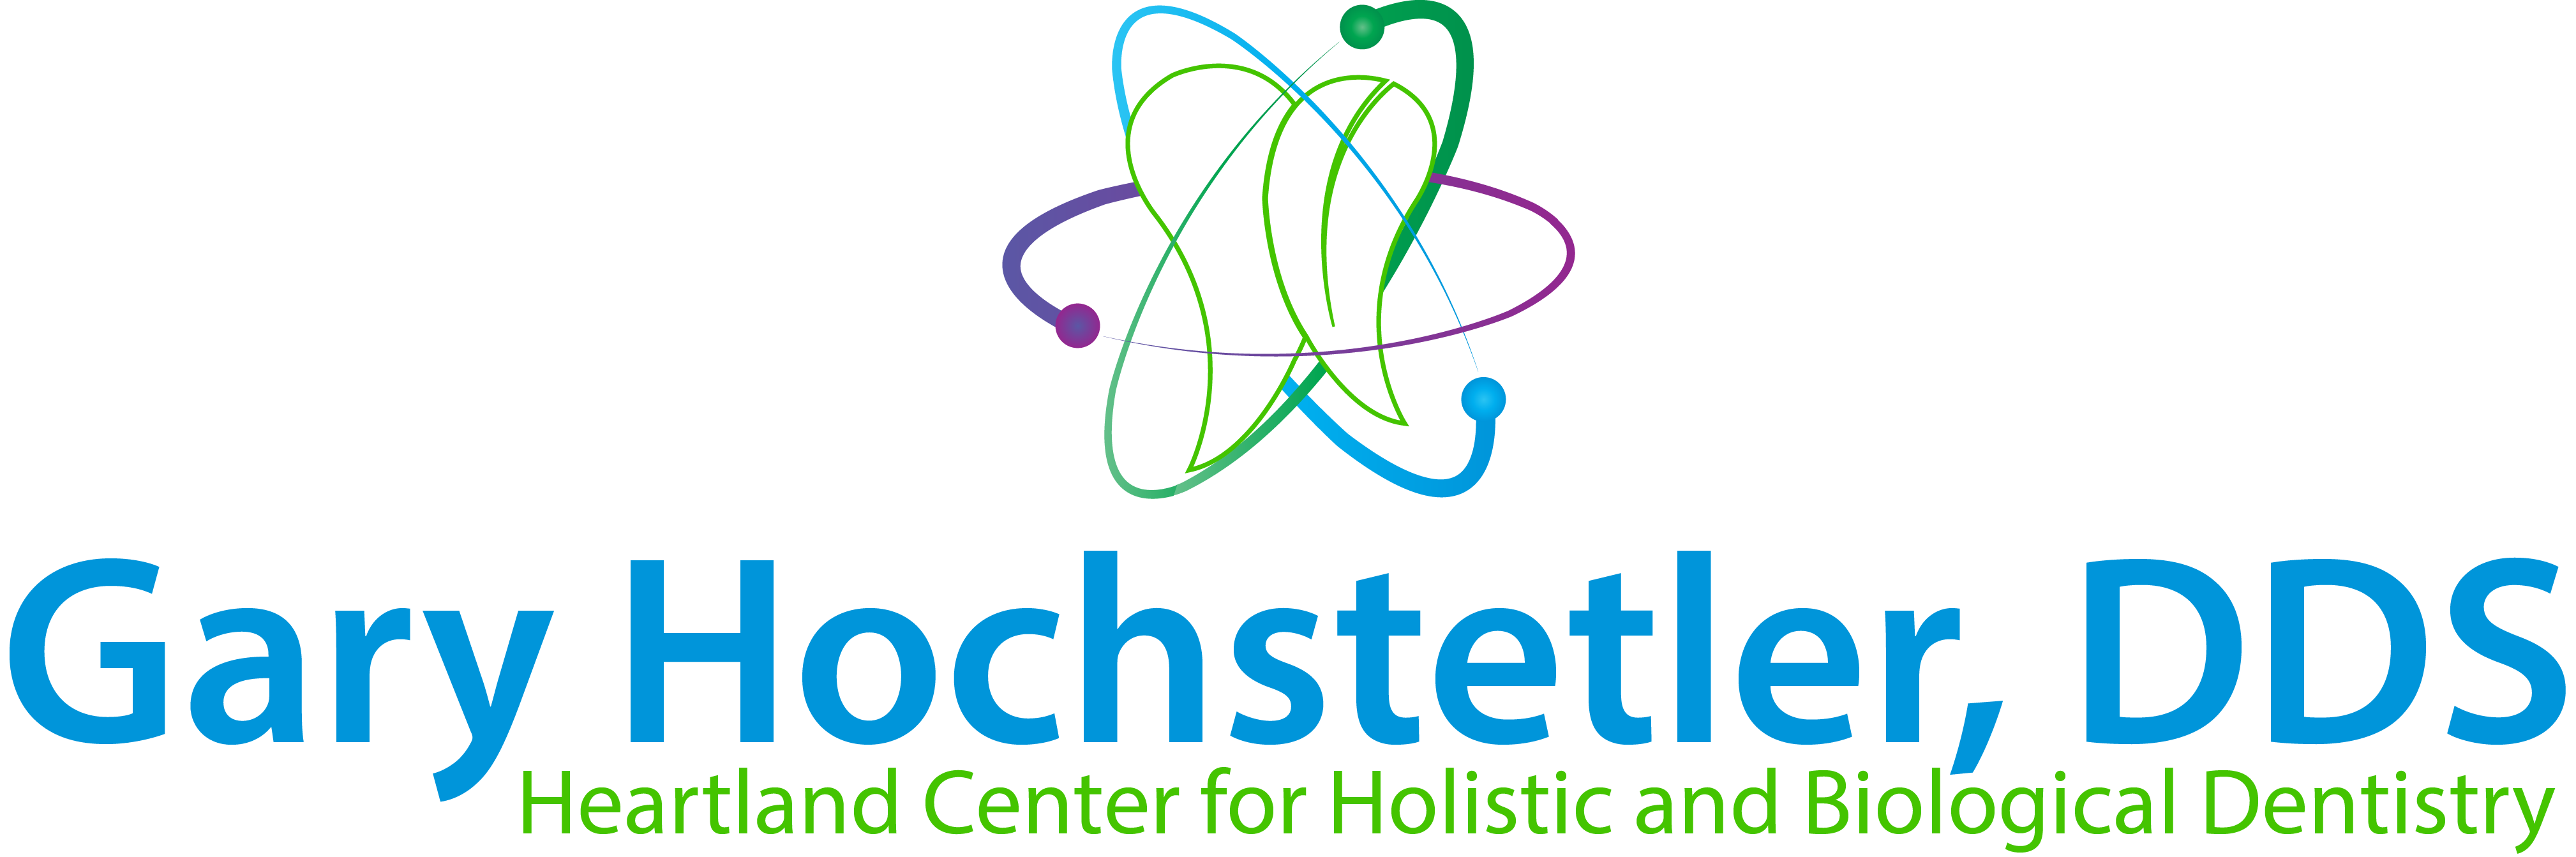 Gary Hochstetler, DDS 
Heartland Center for Holistic and Biological Dentistry Logo